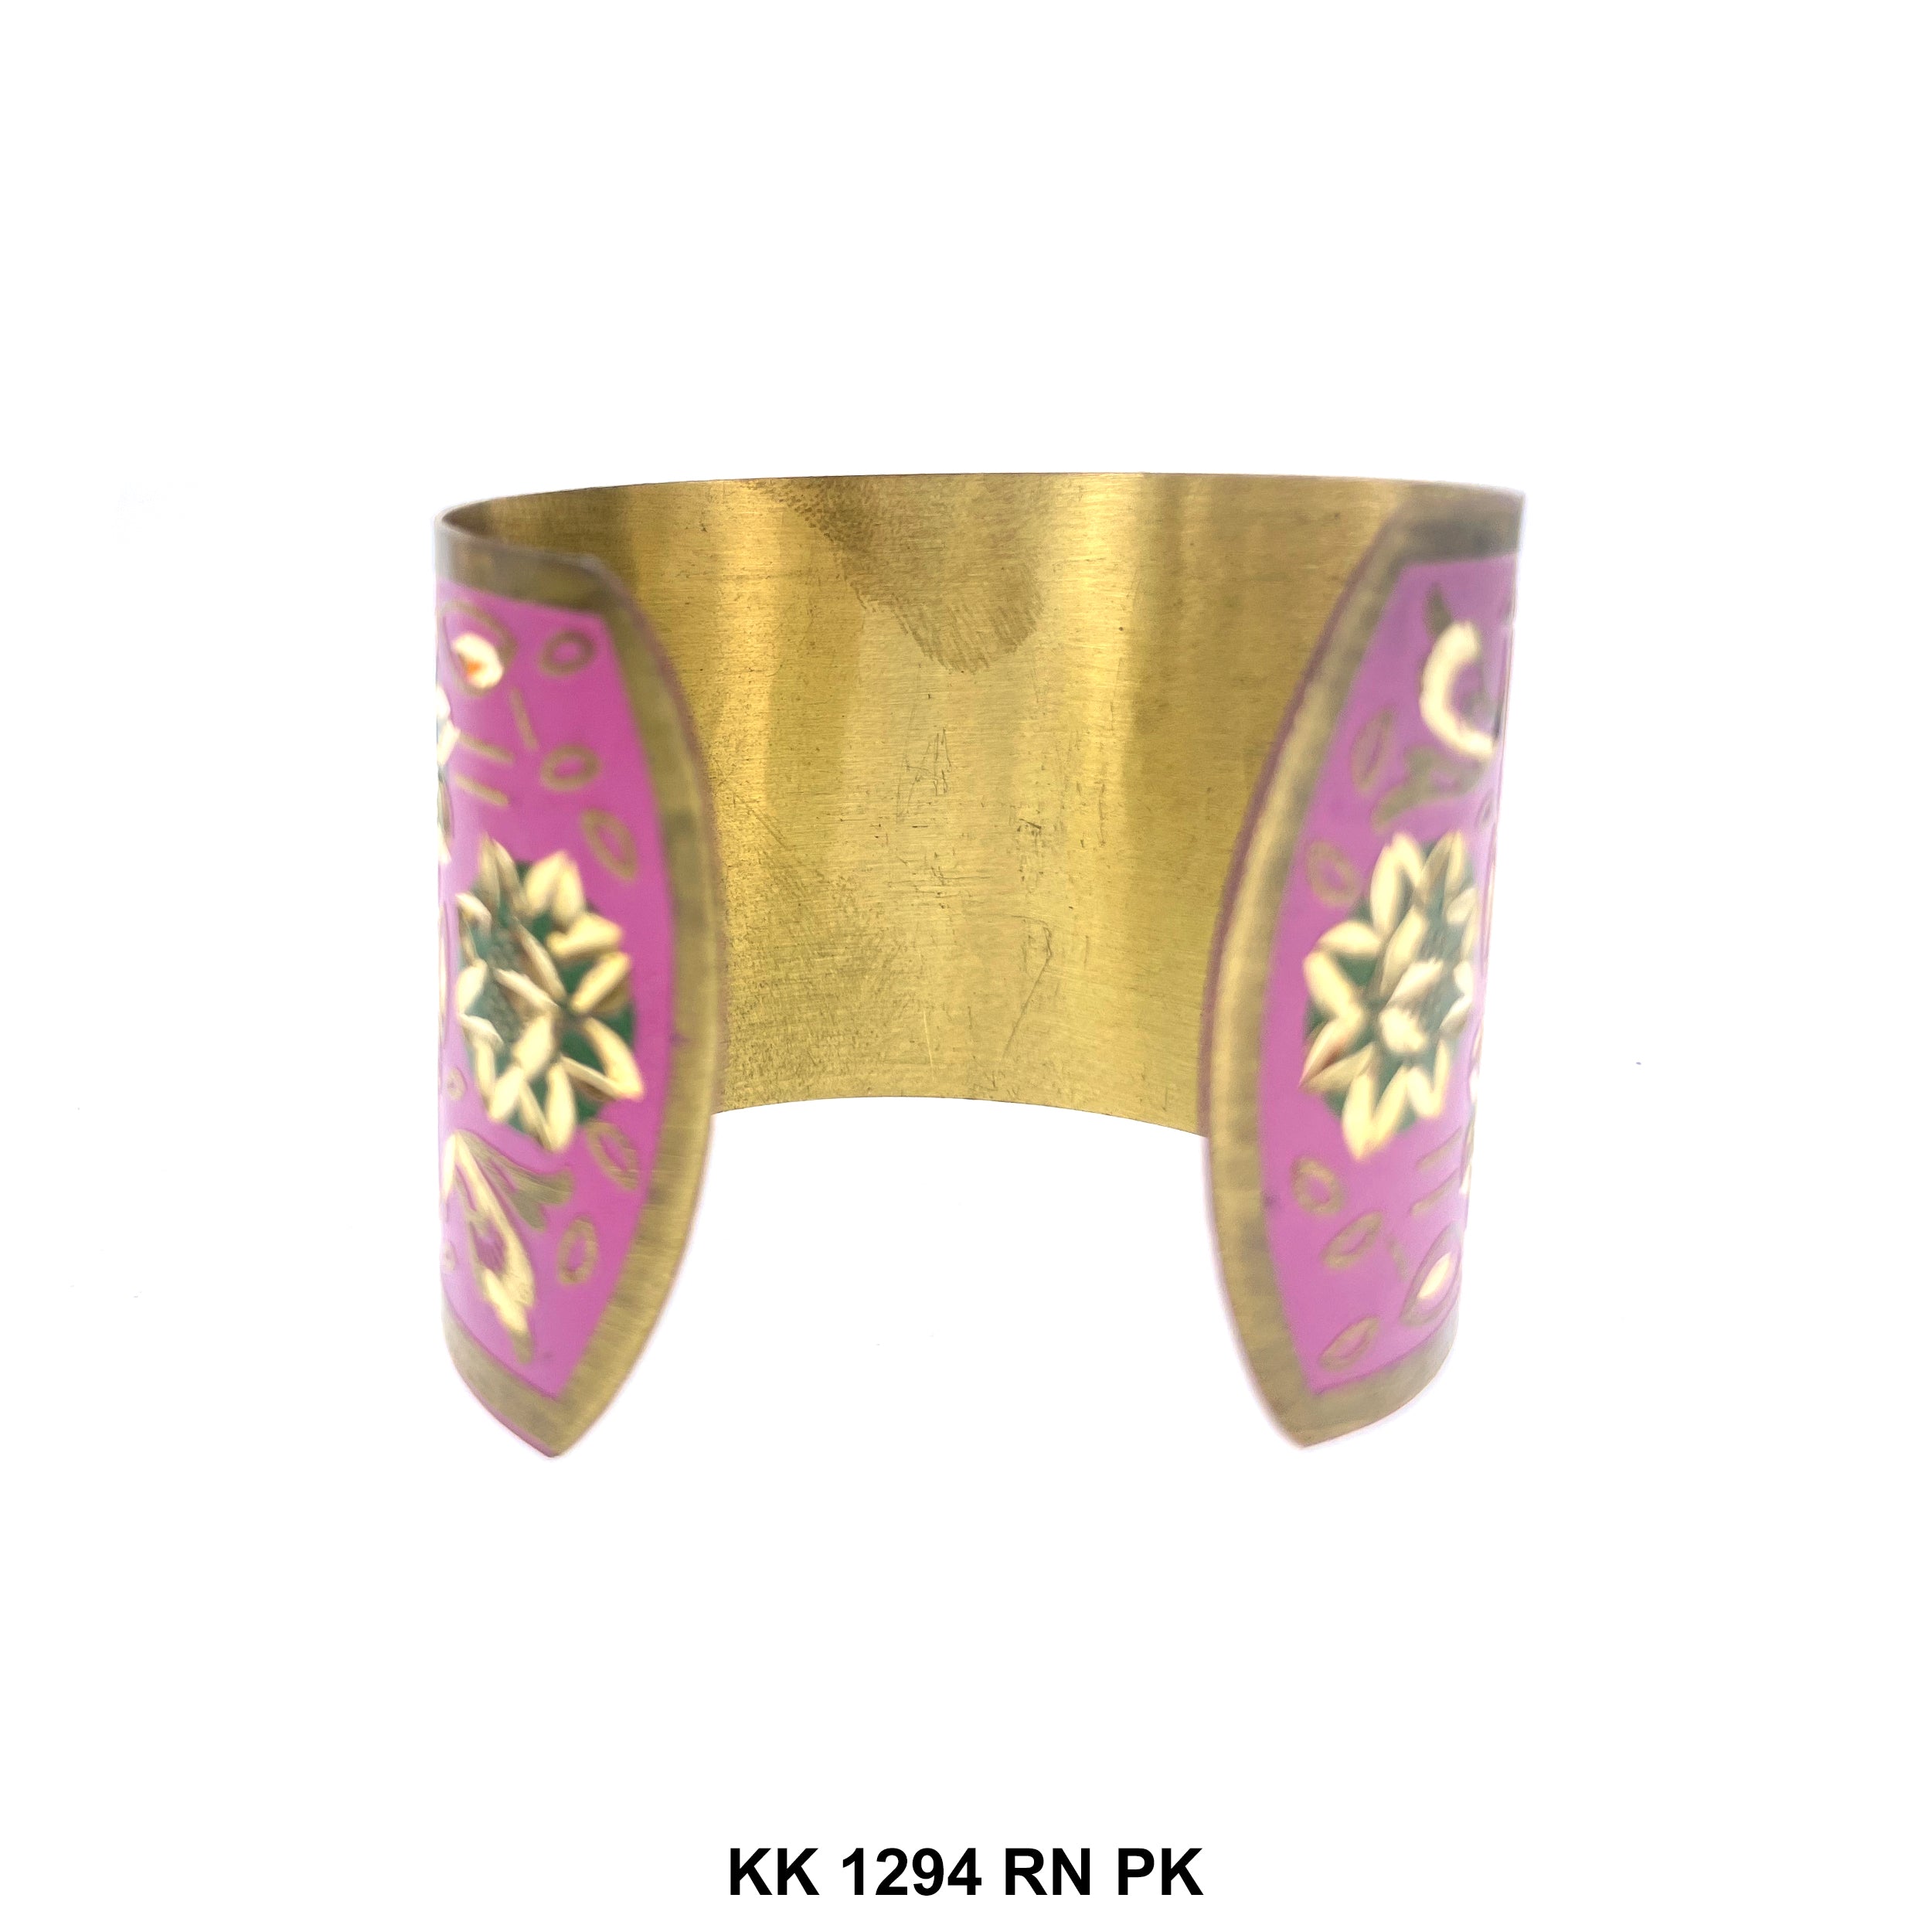 Hand Engraved Cuff Bangle Bracelet KK 1294 RN PK